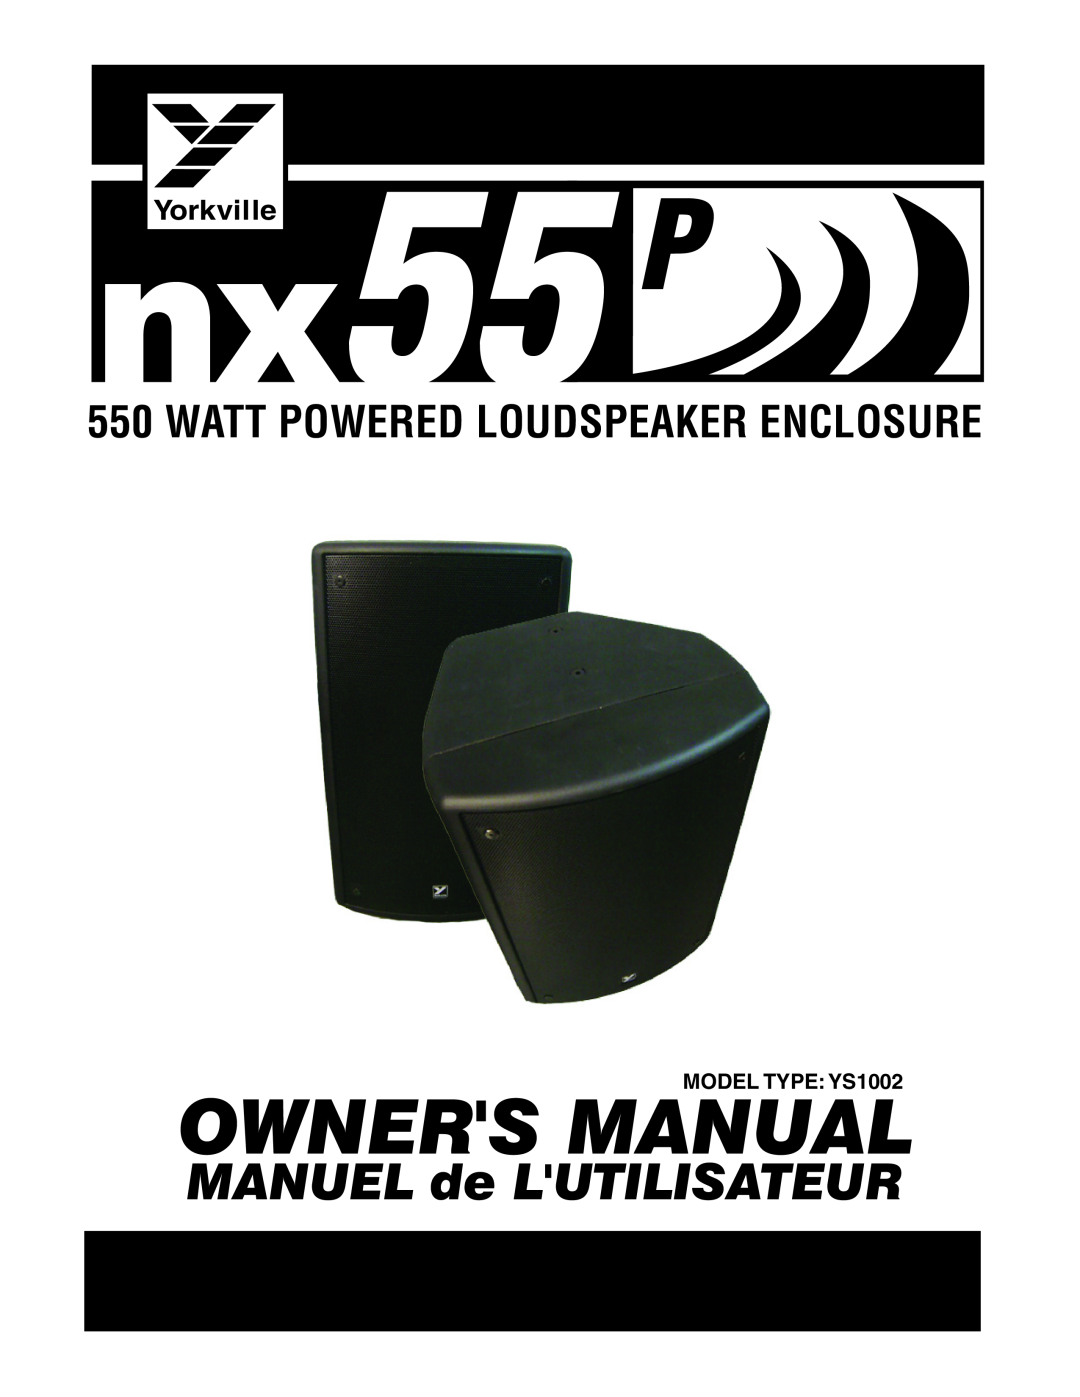 Yorkville Sound nx55p owner manual Watt Powered Loudspeaker Enclosure, MODEL TYPE YS1002, MANUEL de LUTILISATEUR 